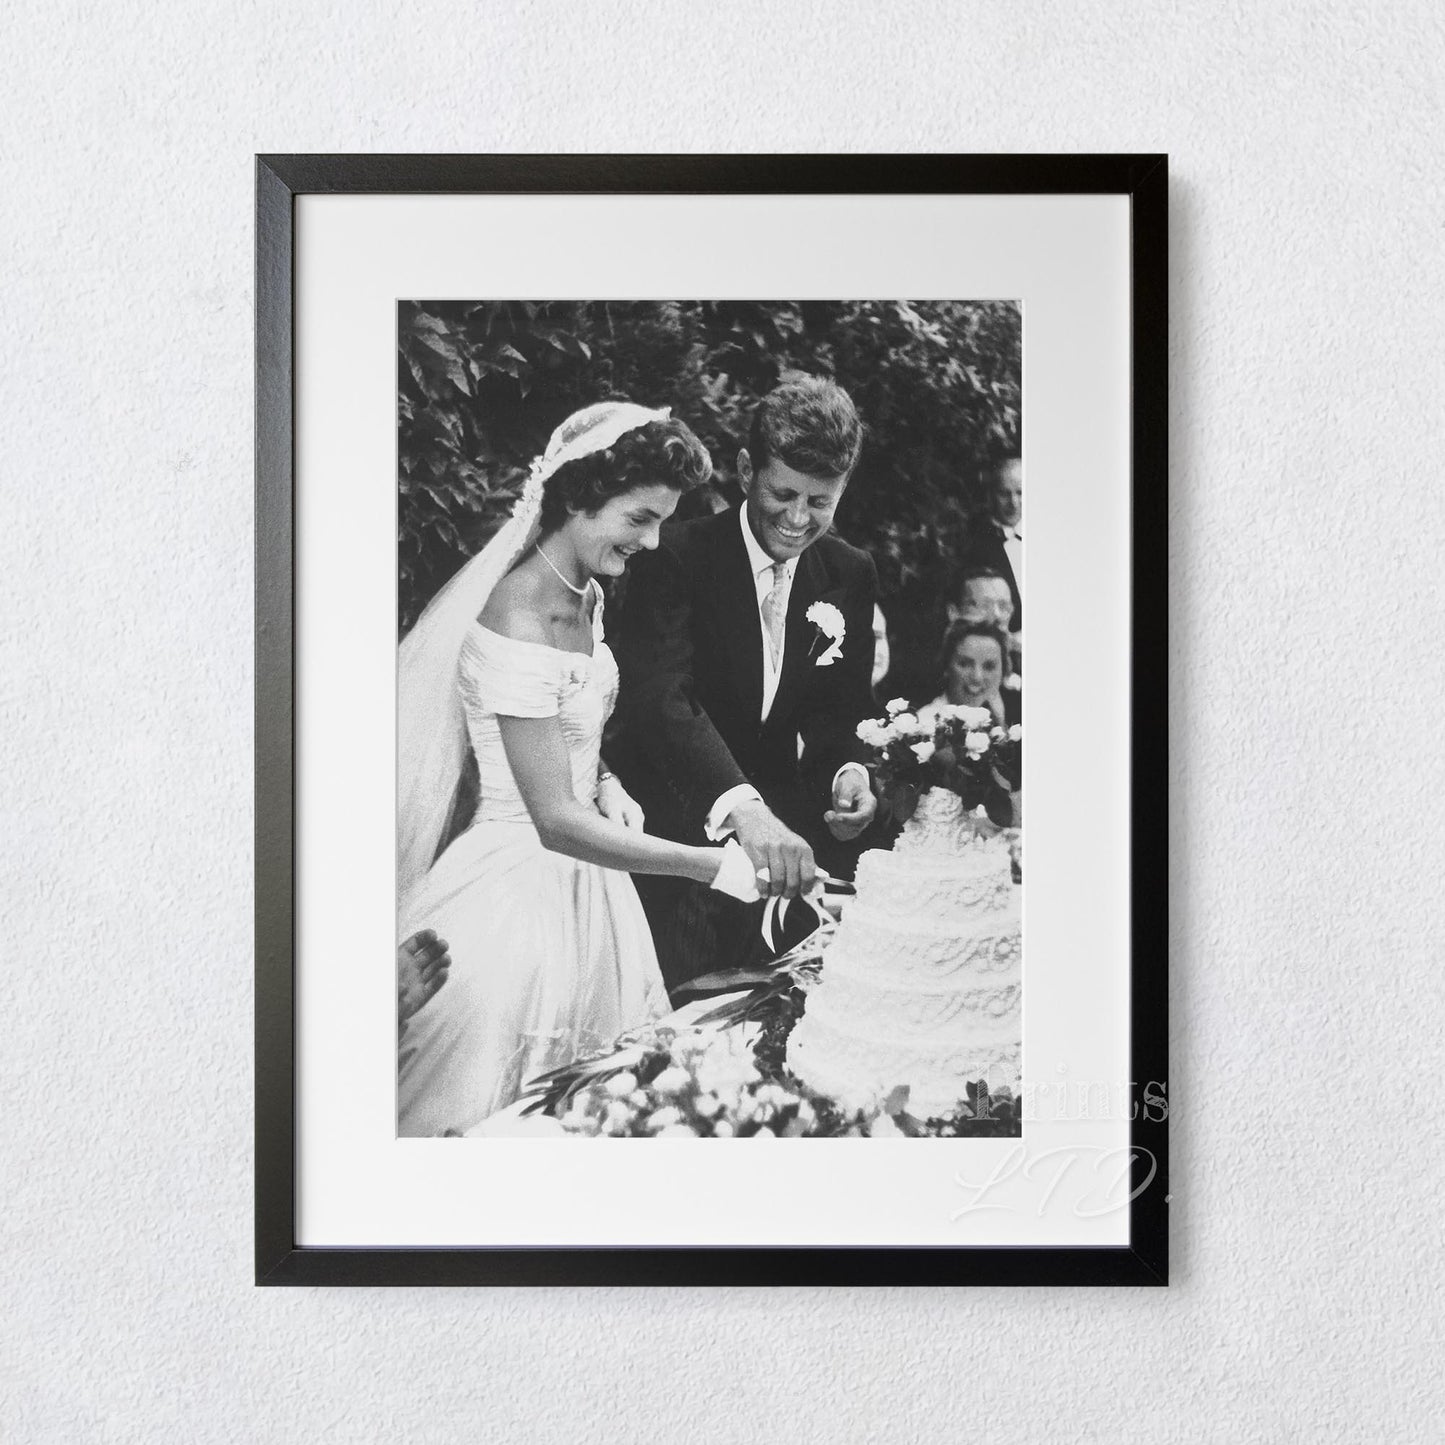 John F Kennedy (JFK) and Jackie Kennedy cutting cake at their wedding